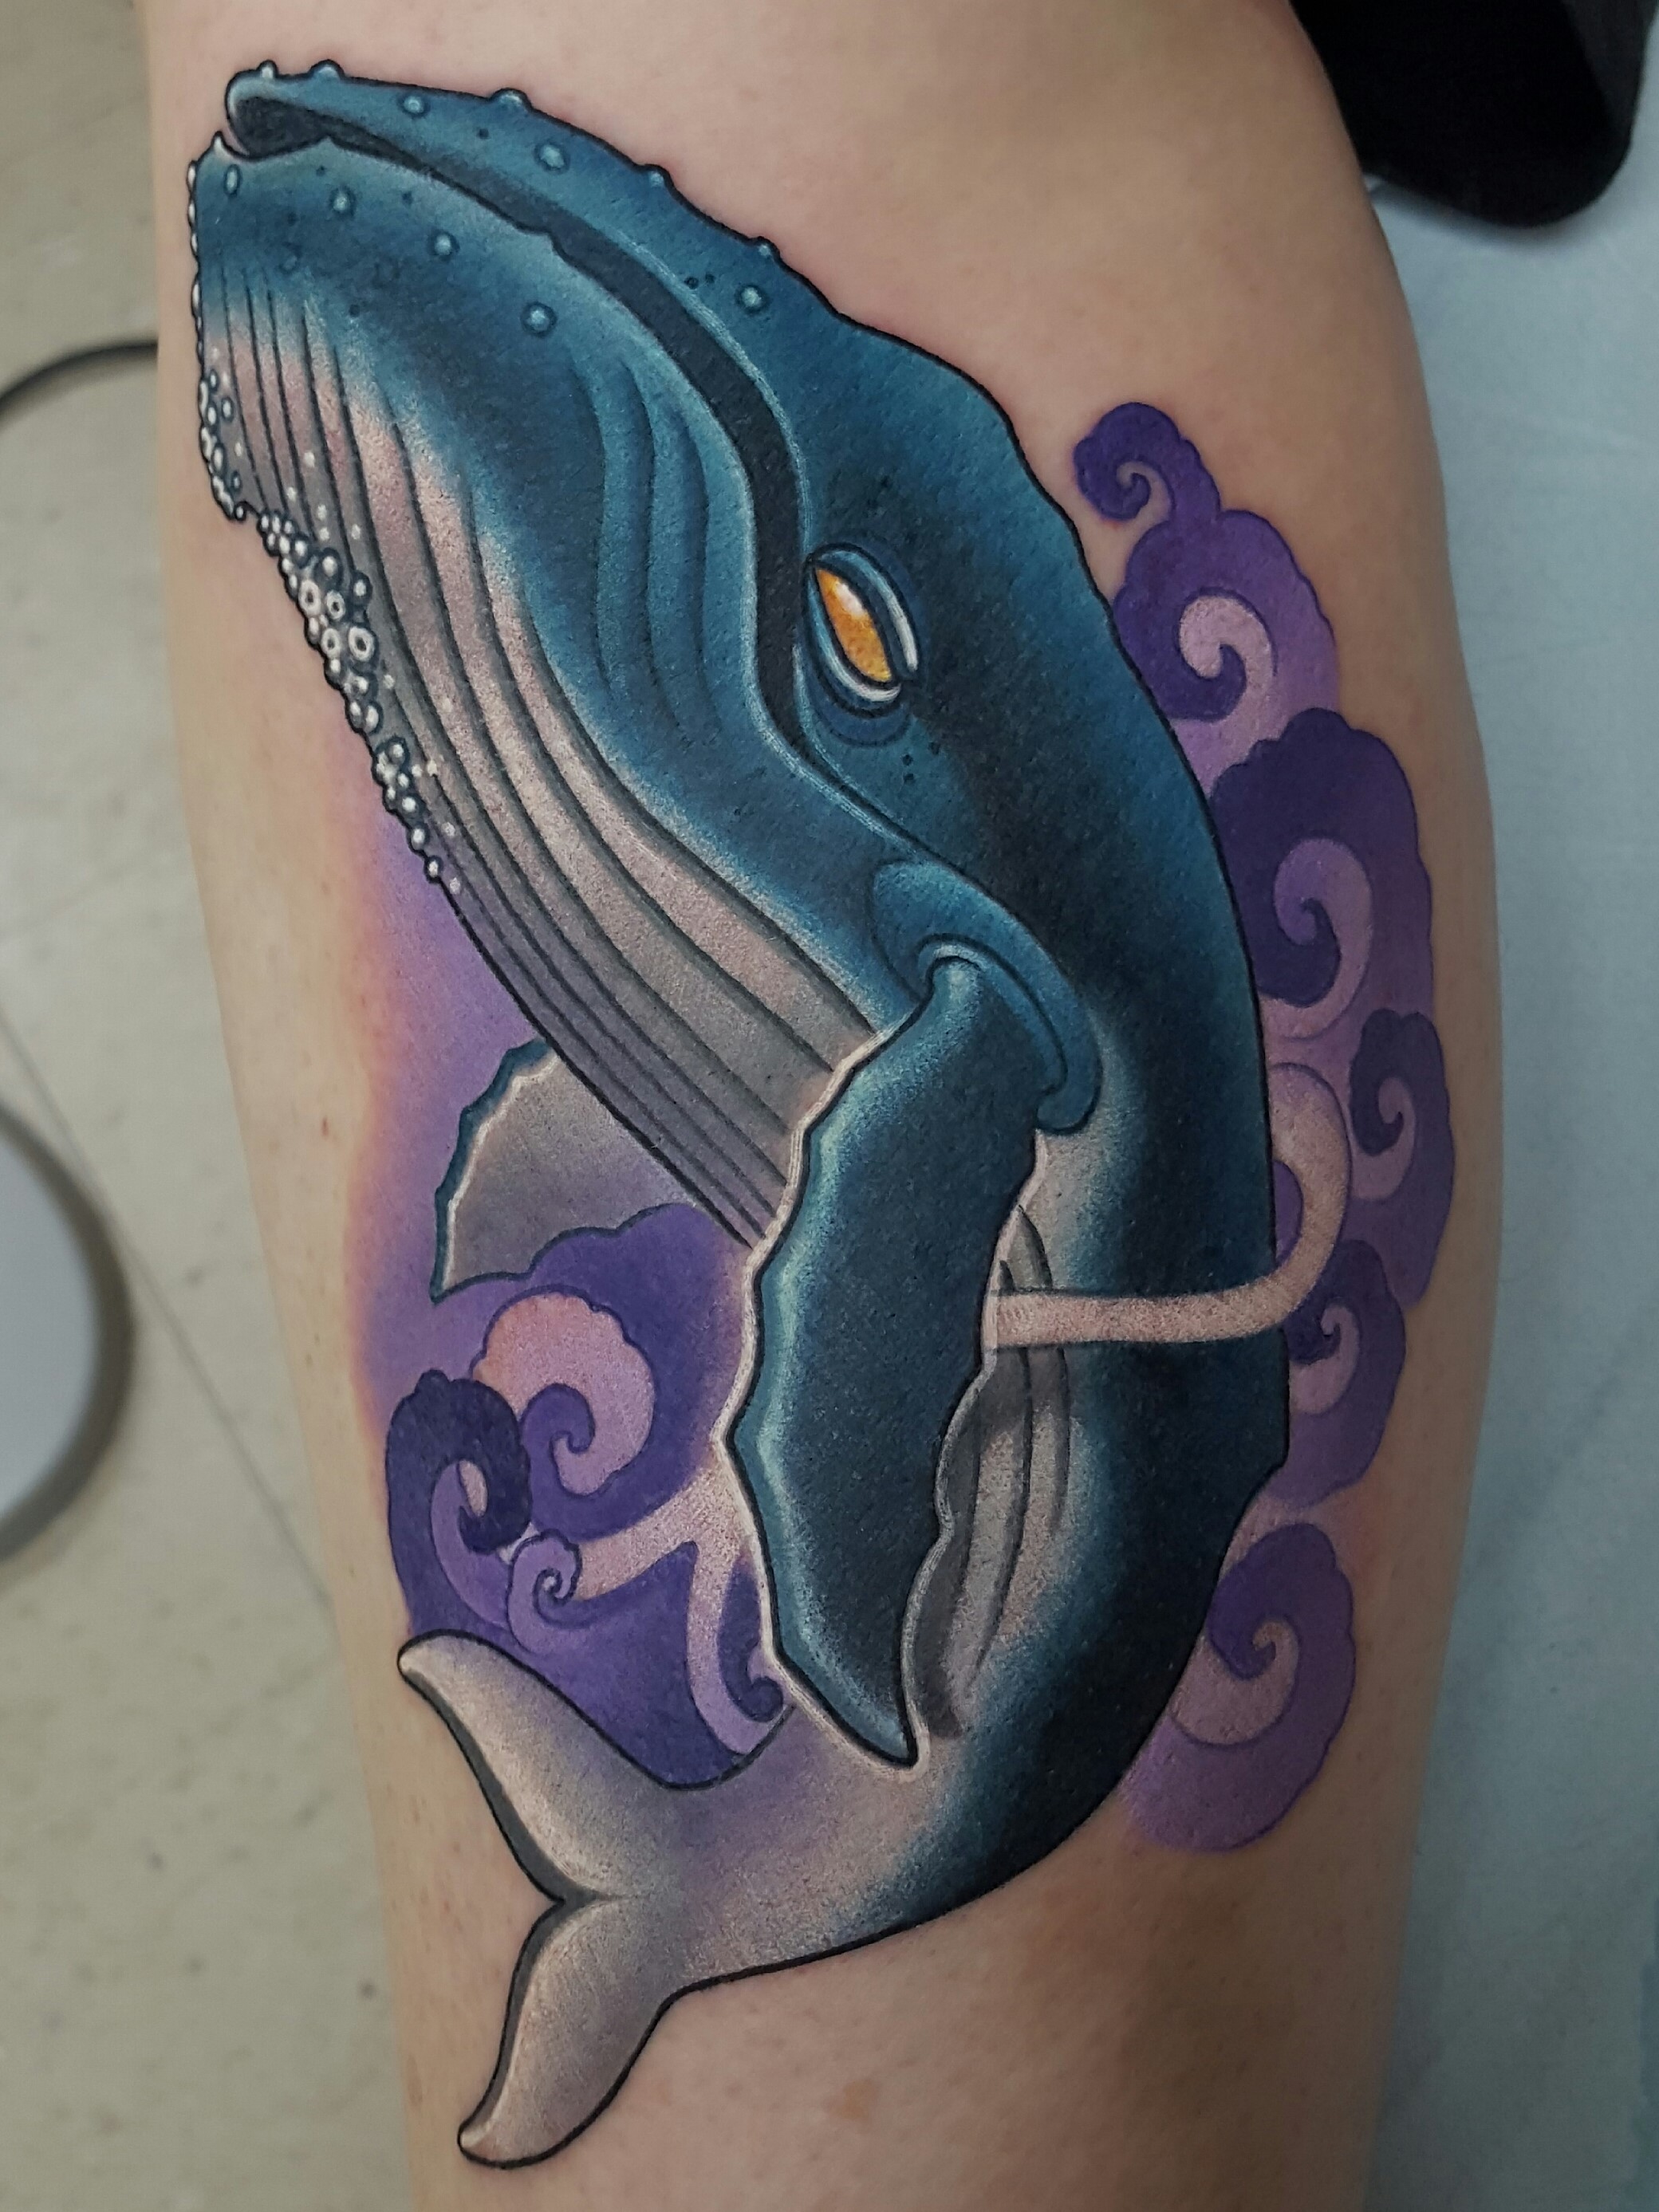 Whale Tattoo by CT artist Cracker Joe Swider